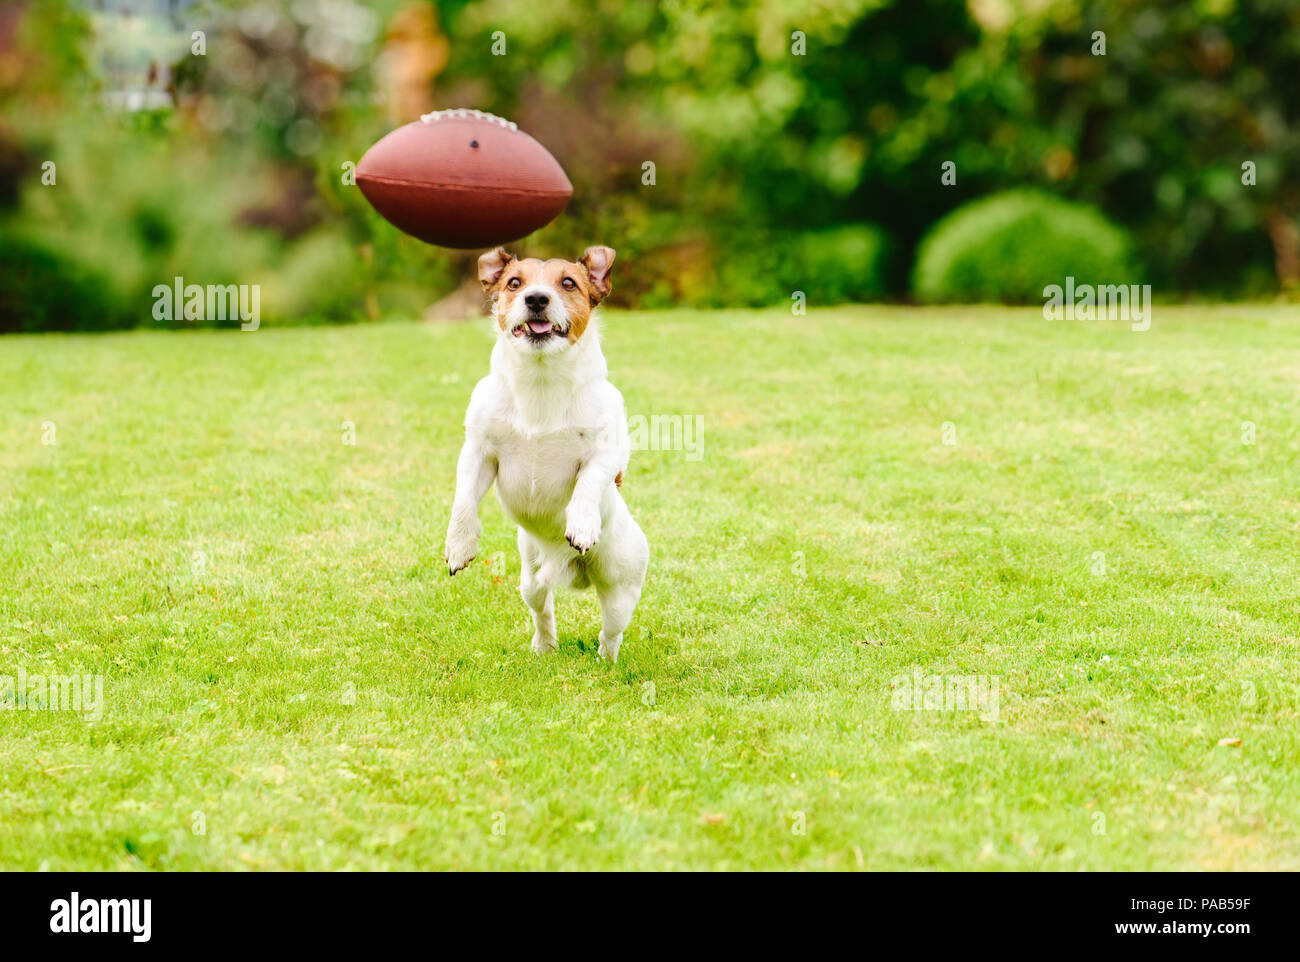 Lustig Hund spielen mit American football Ball im Hinterhof Rasen Stockfoto